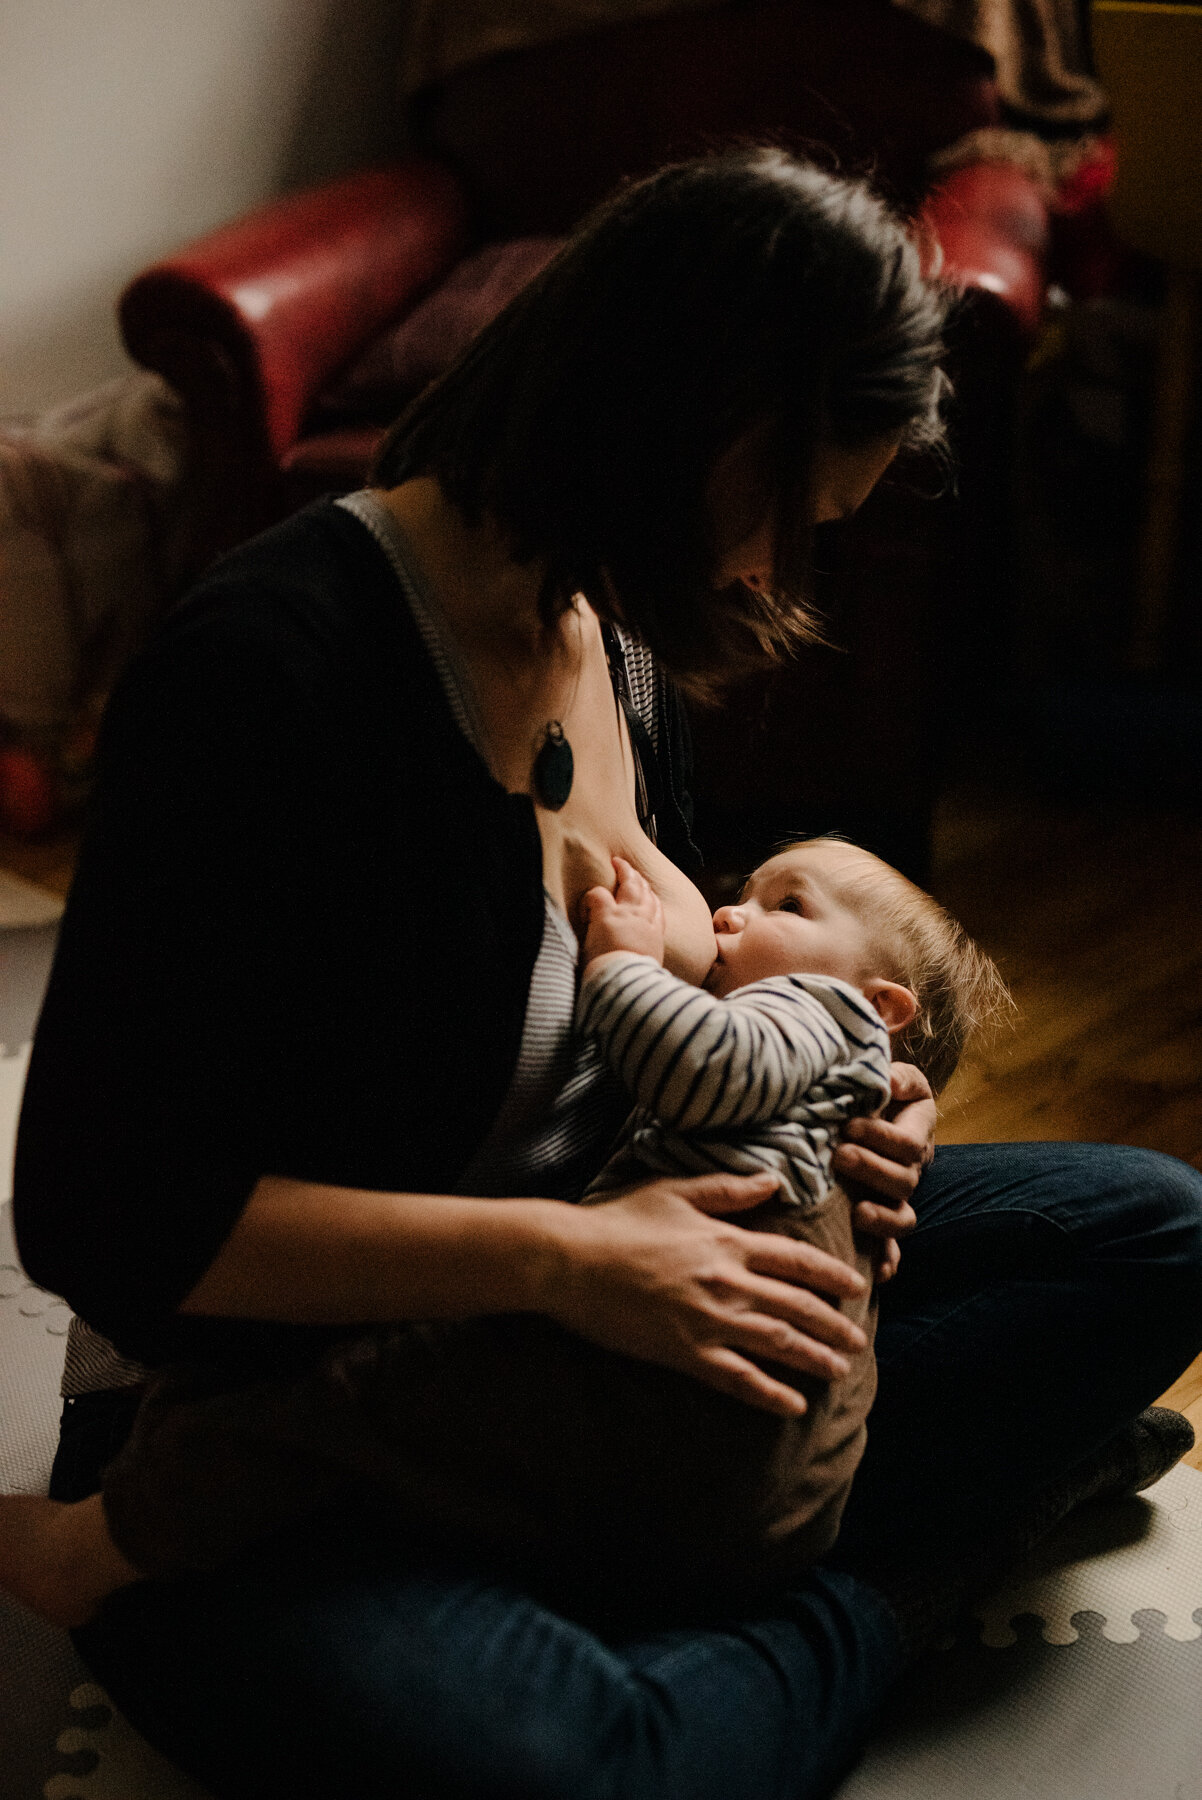 seance-mere-maman-enfant-maternite-allaitement-a-domicile-appartement-montrealais-intimite-photographe-famille-documentaire-a-montreal-marianne-charland-229.jpg